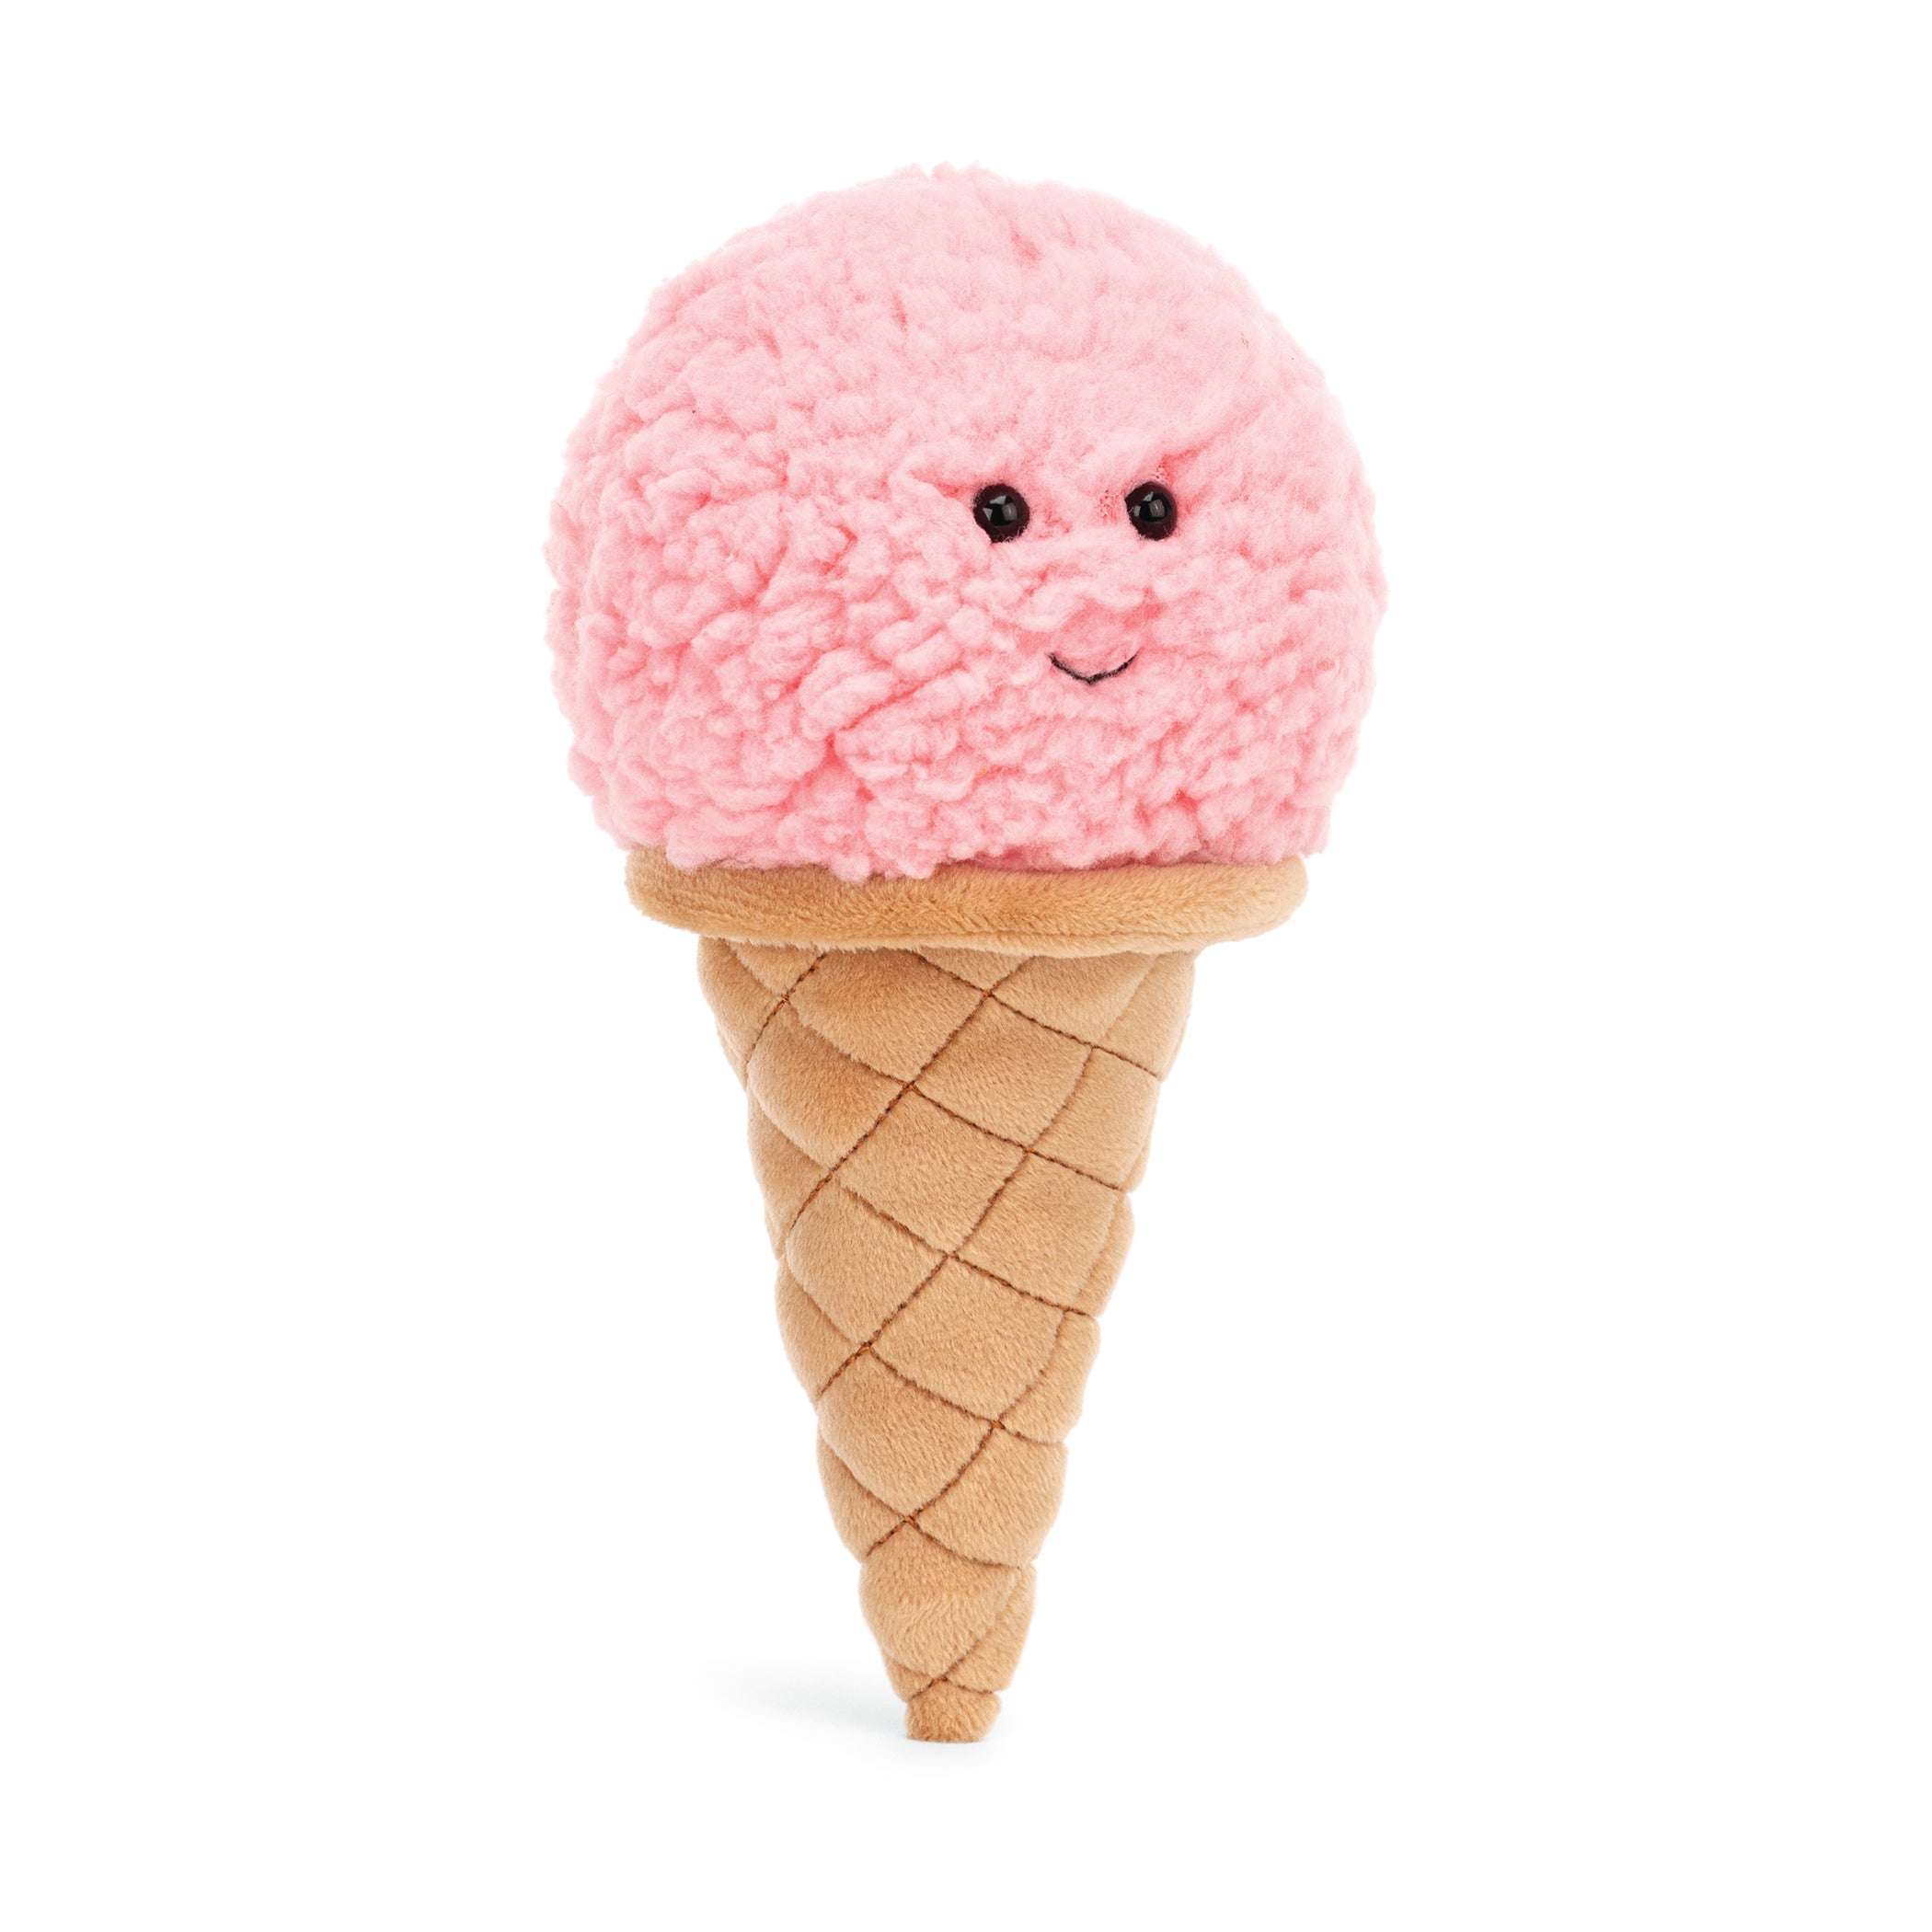 Irresistible Strawberry Ice Cream